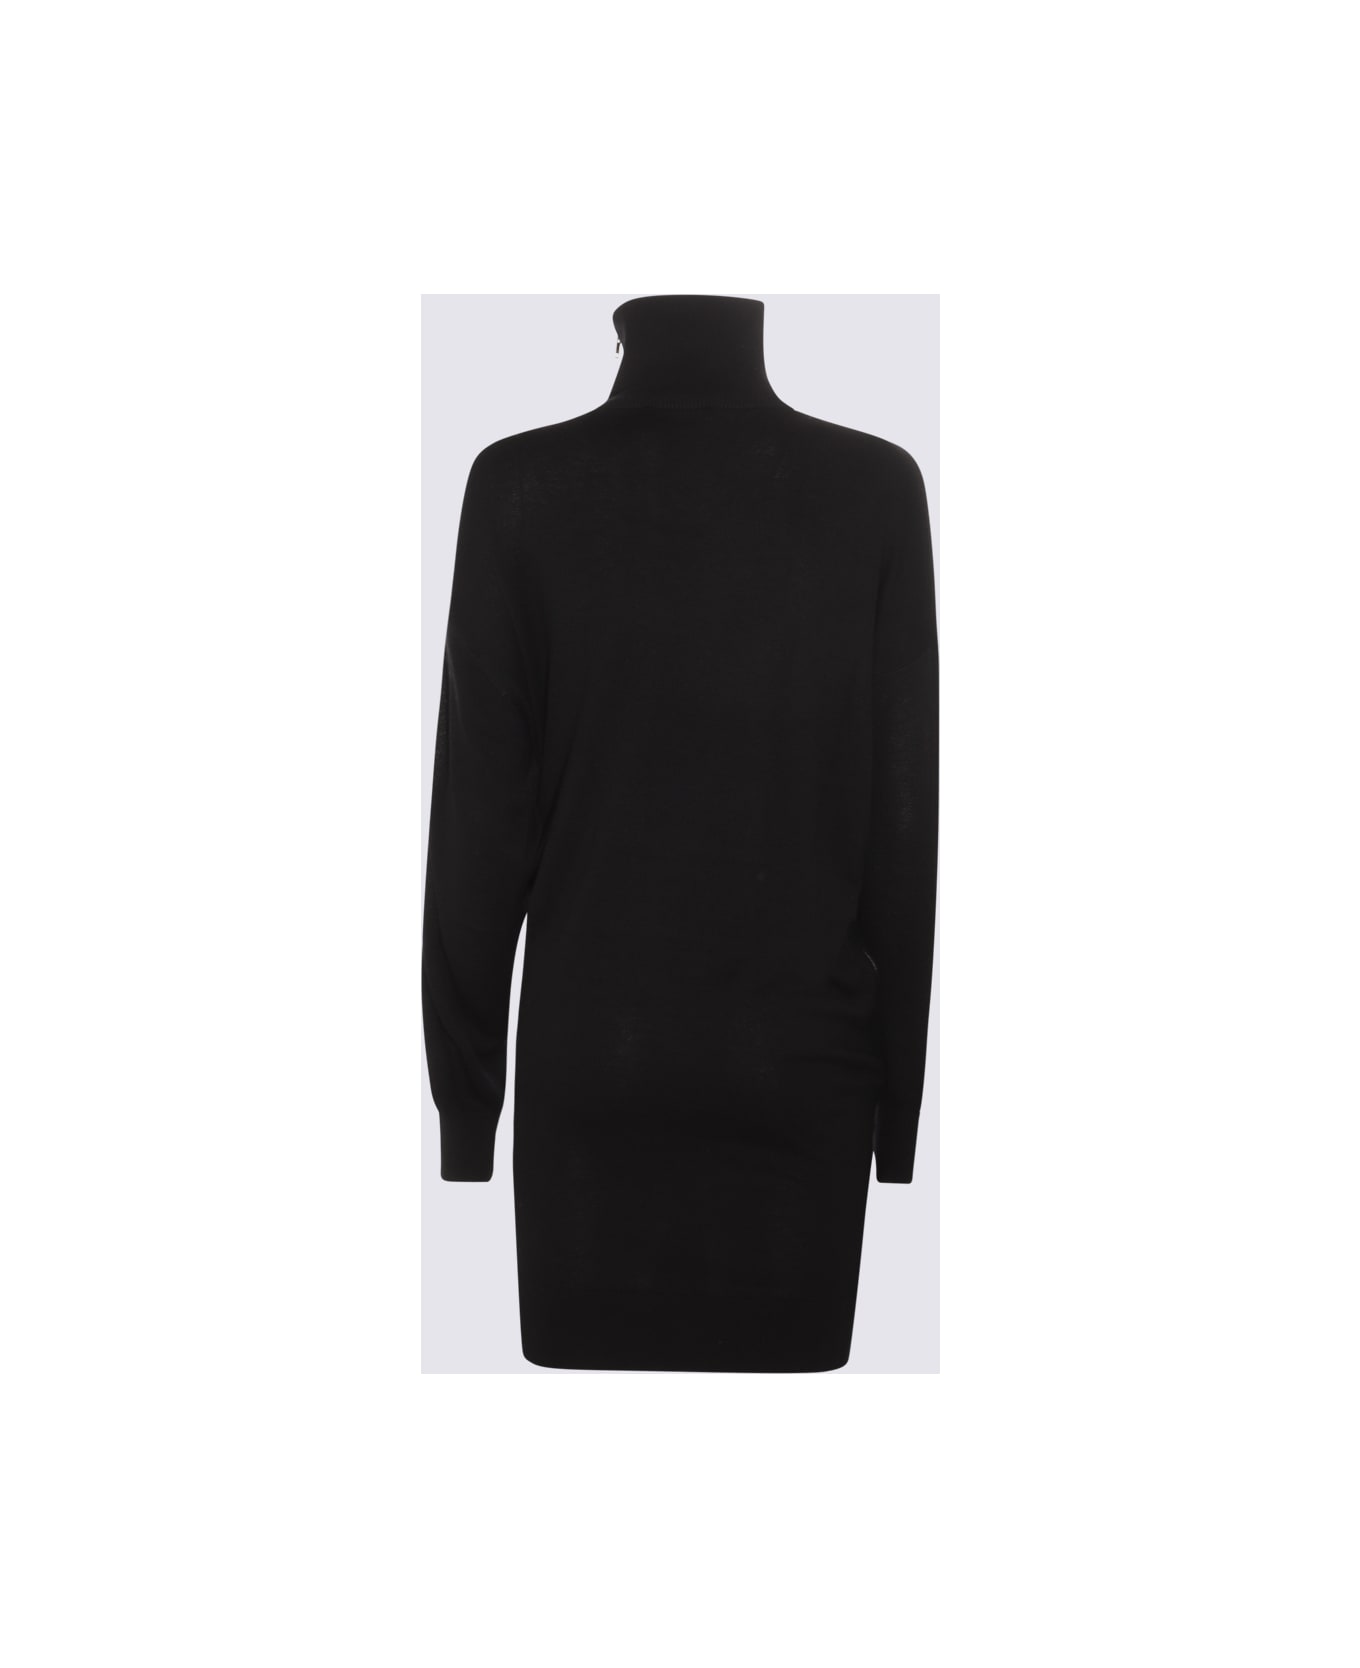 Isabel Marant Black Viscose And Wool Blend Dress - Black